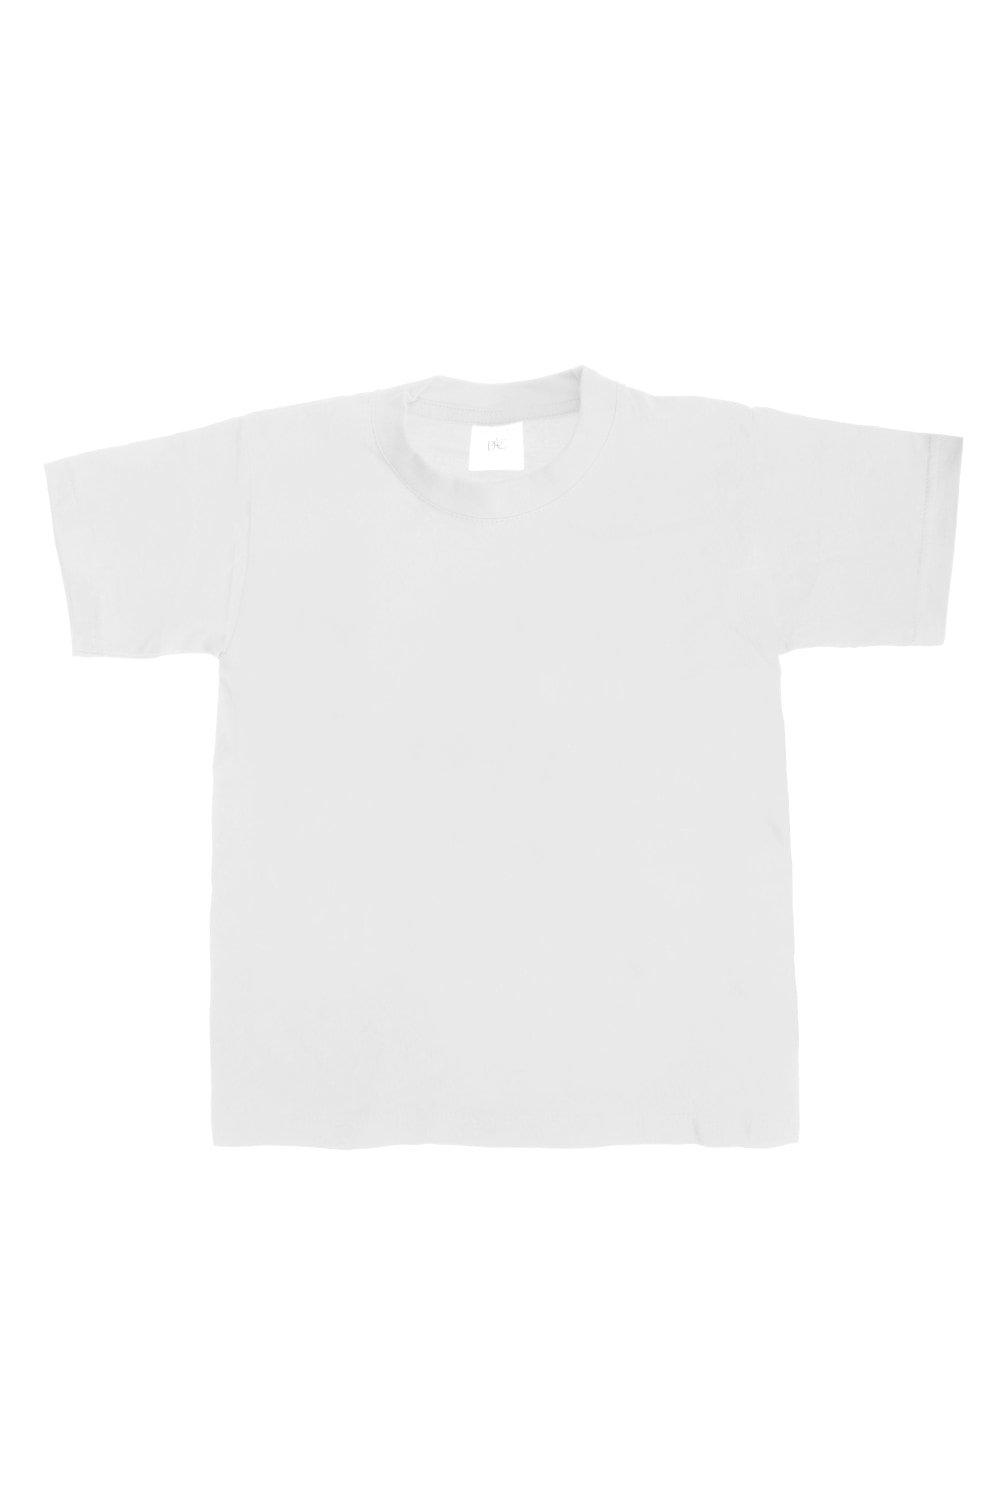 Exact 190 Short Sleeved T-Shirt Pack of 2